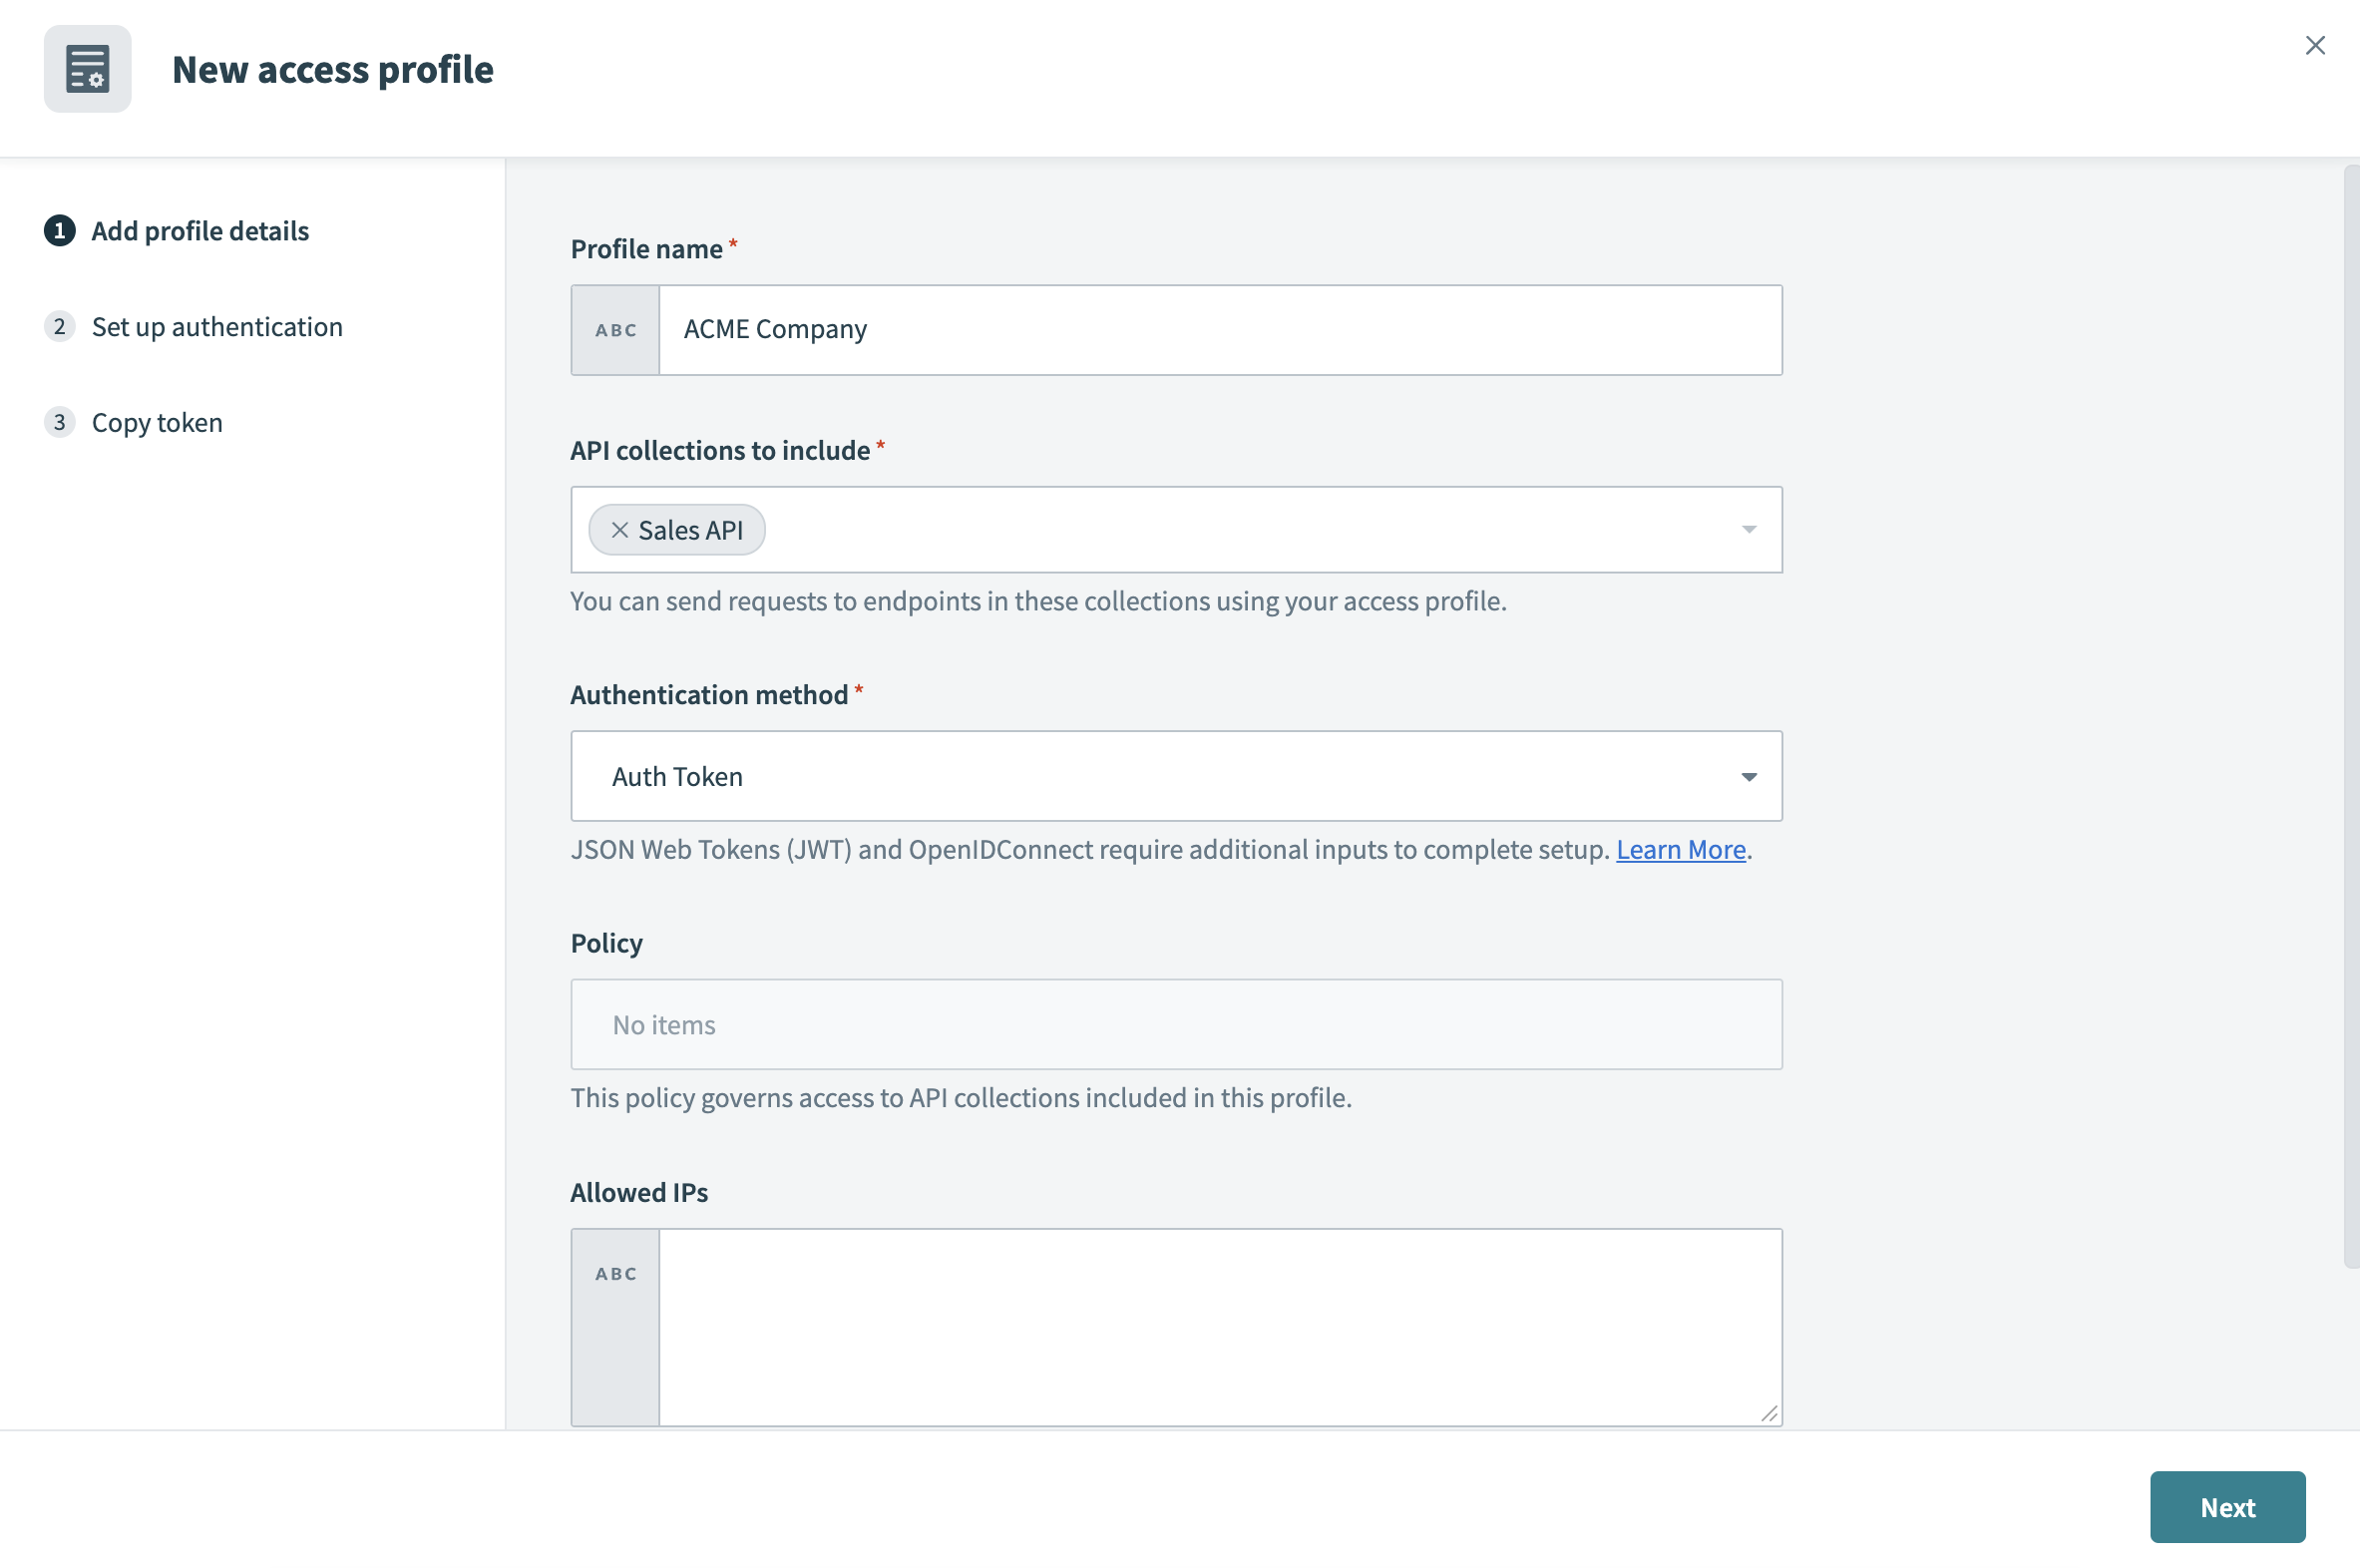 Configure new access profile settings